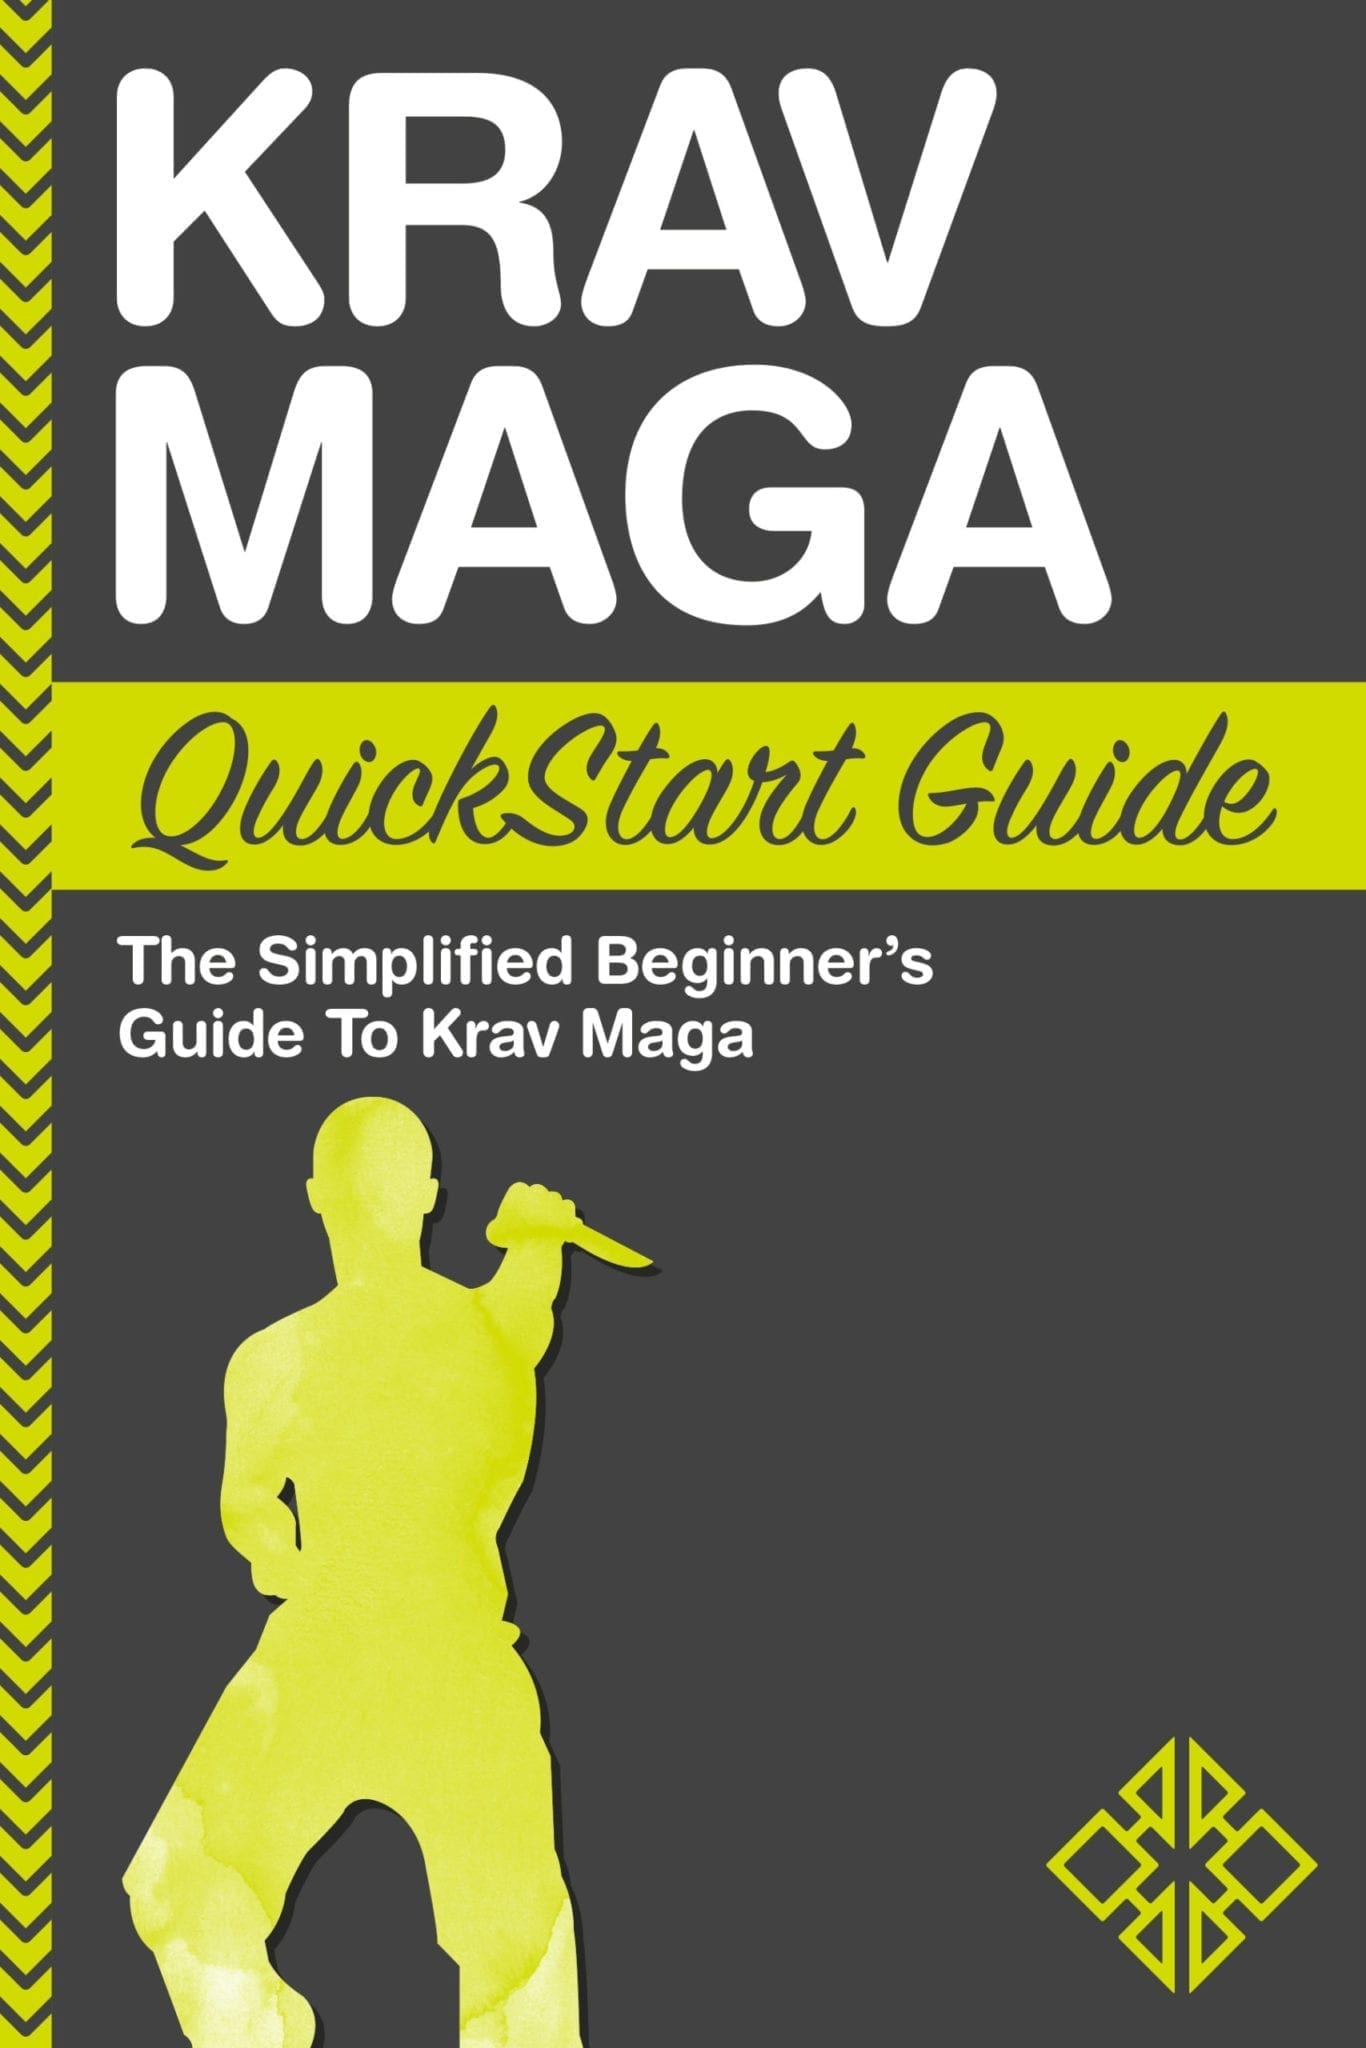 Krav Maga QuickStart Guide - Available now from ClydeBank Media